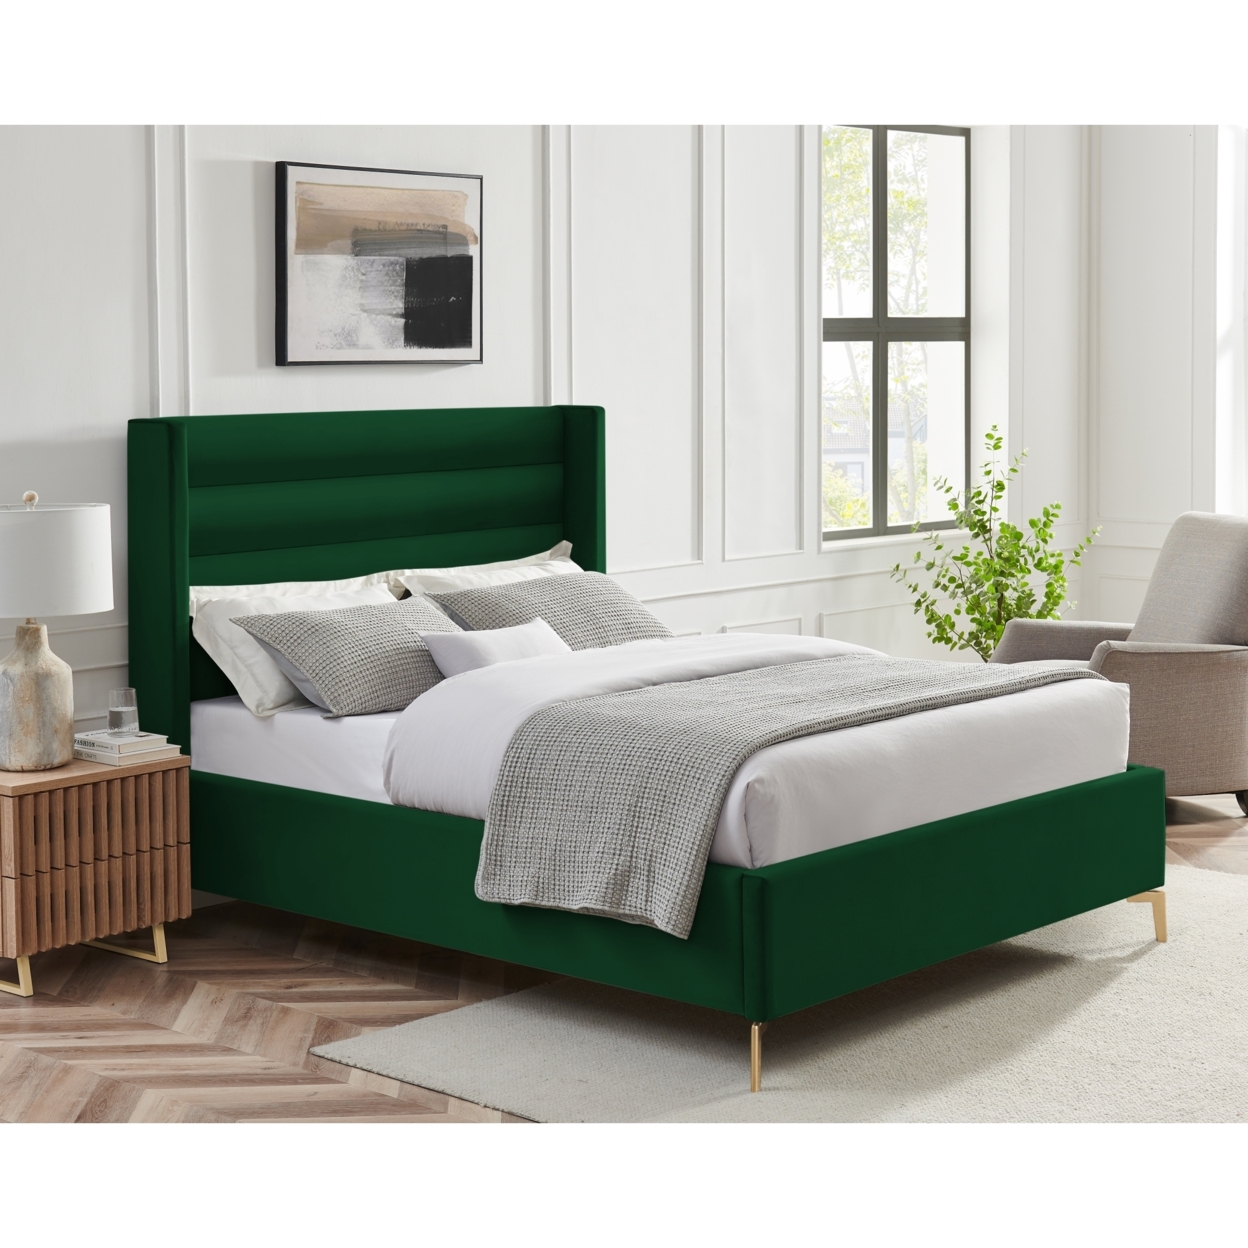 Rayce Bed -Velvet Upholstered, Wingback Channel Tufted Headboard, Oblique Legs, Slats Included - Green, King